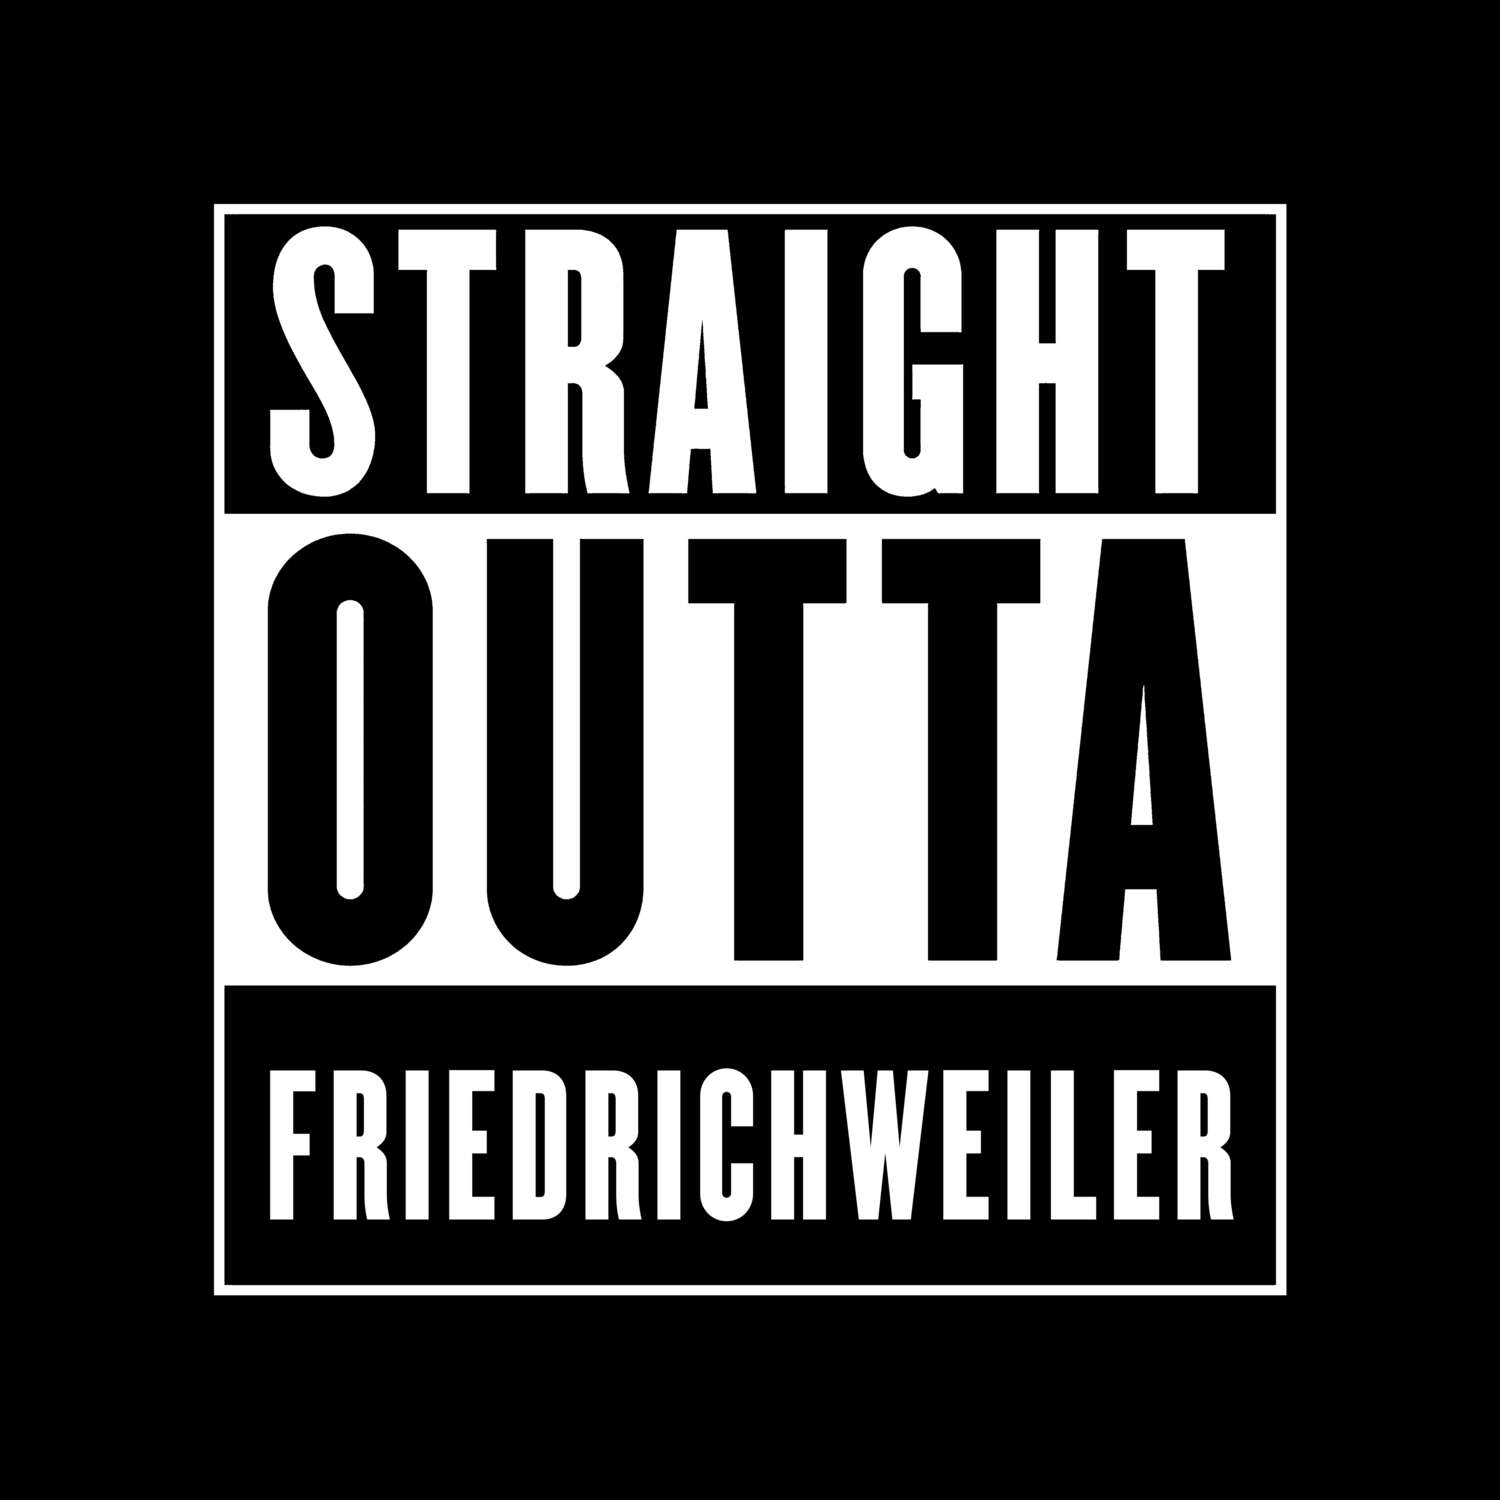 Friedrichweiler T-Shirt »Straight Outta«